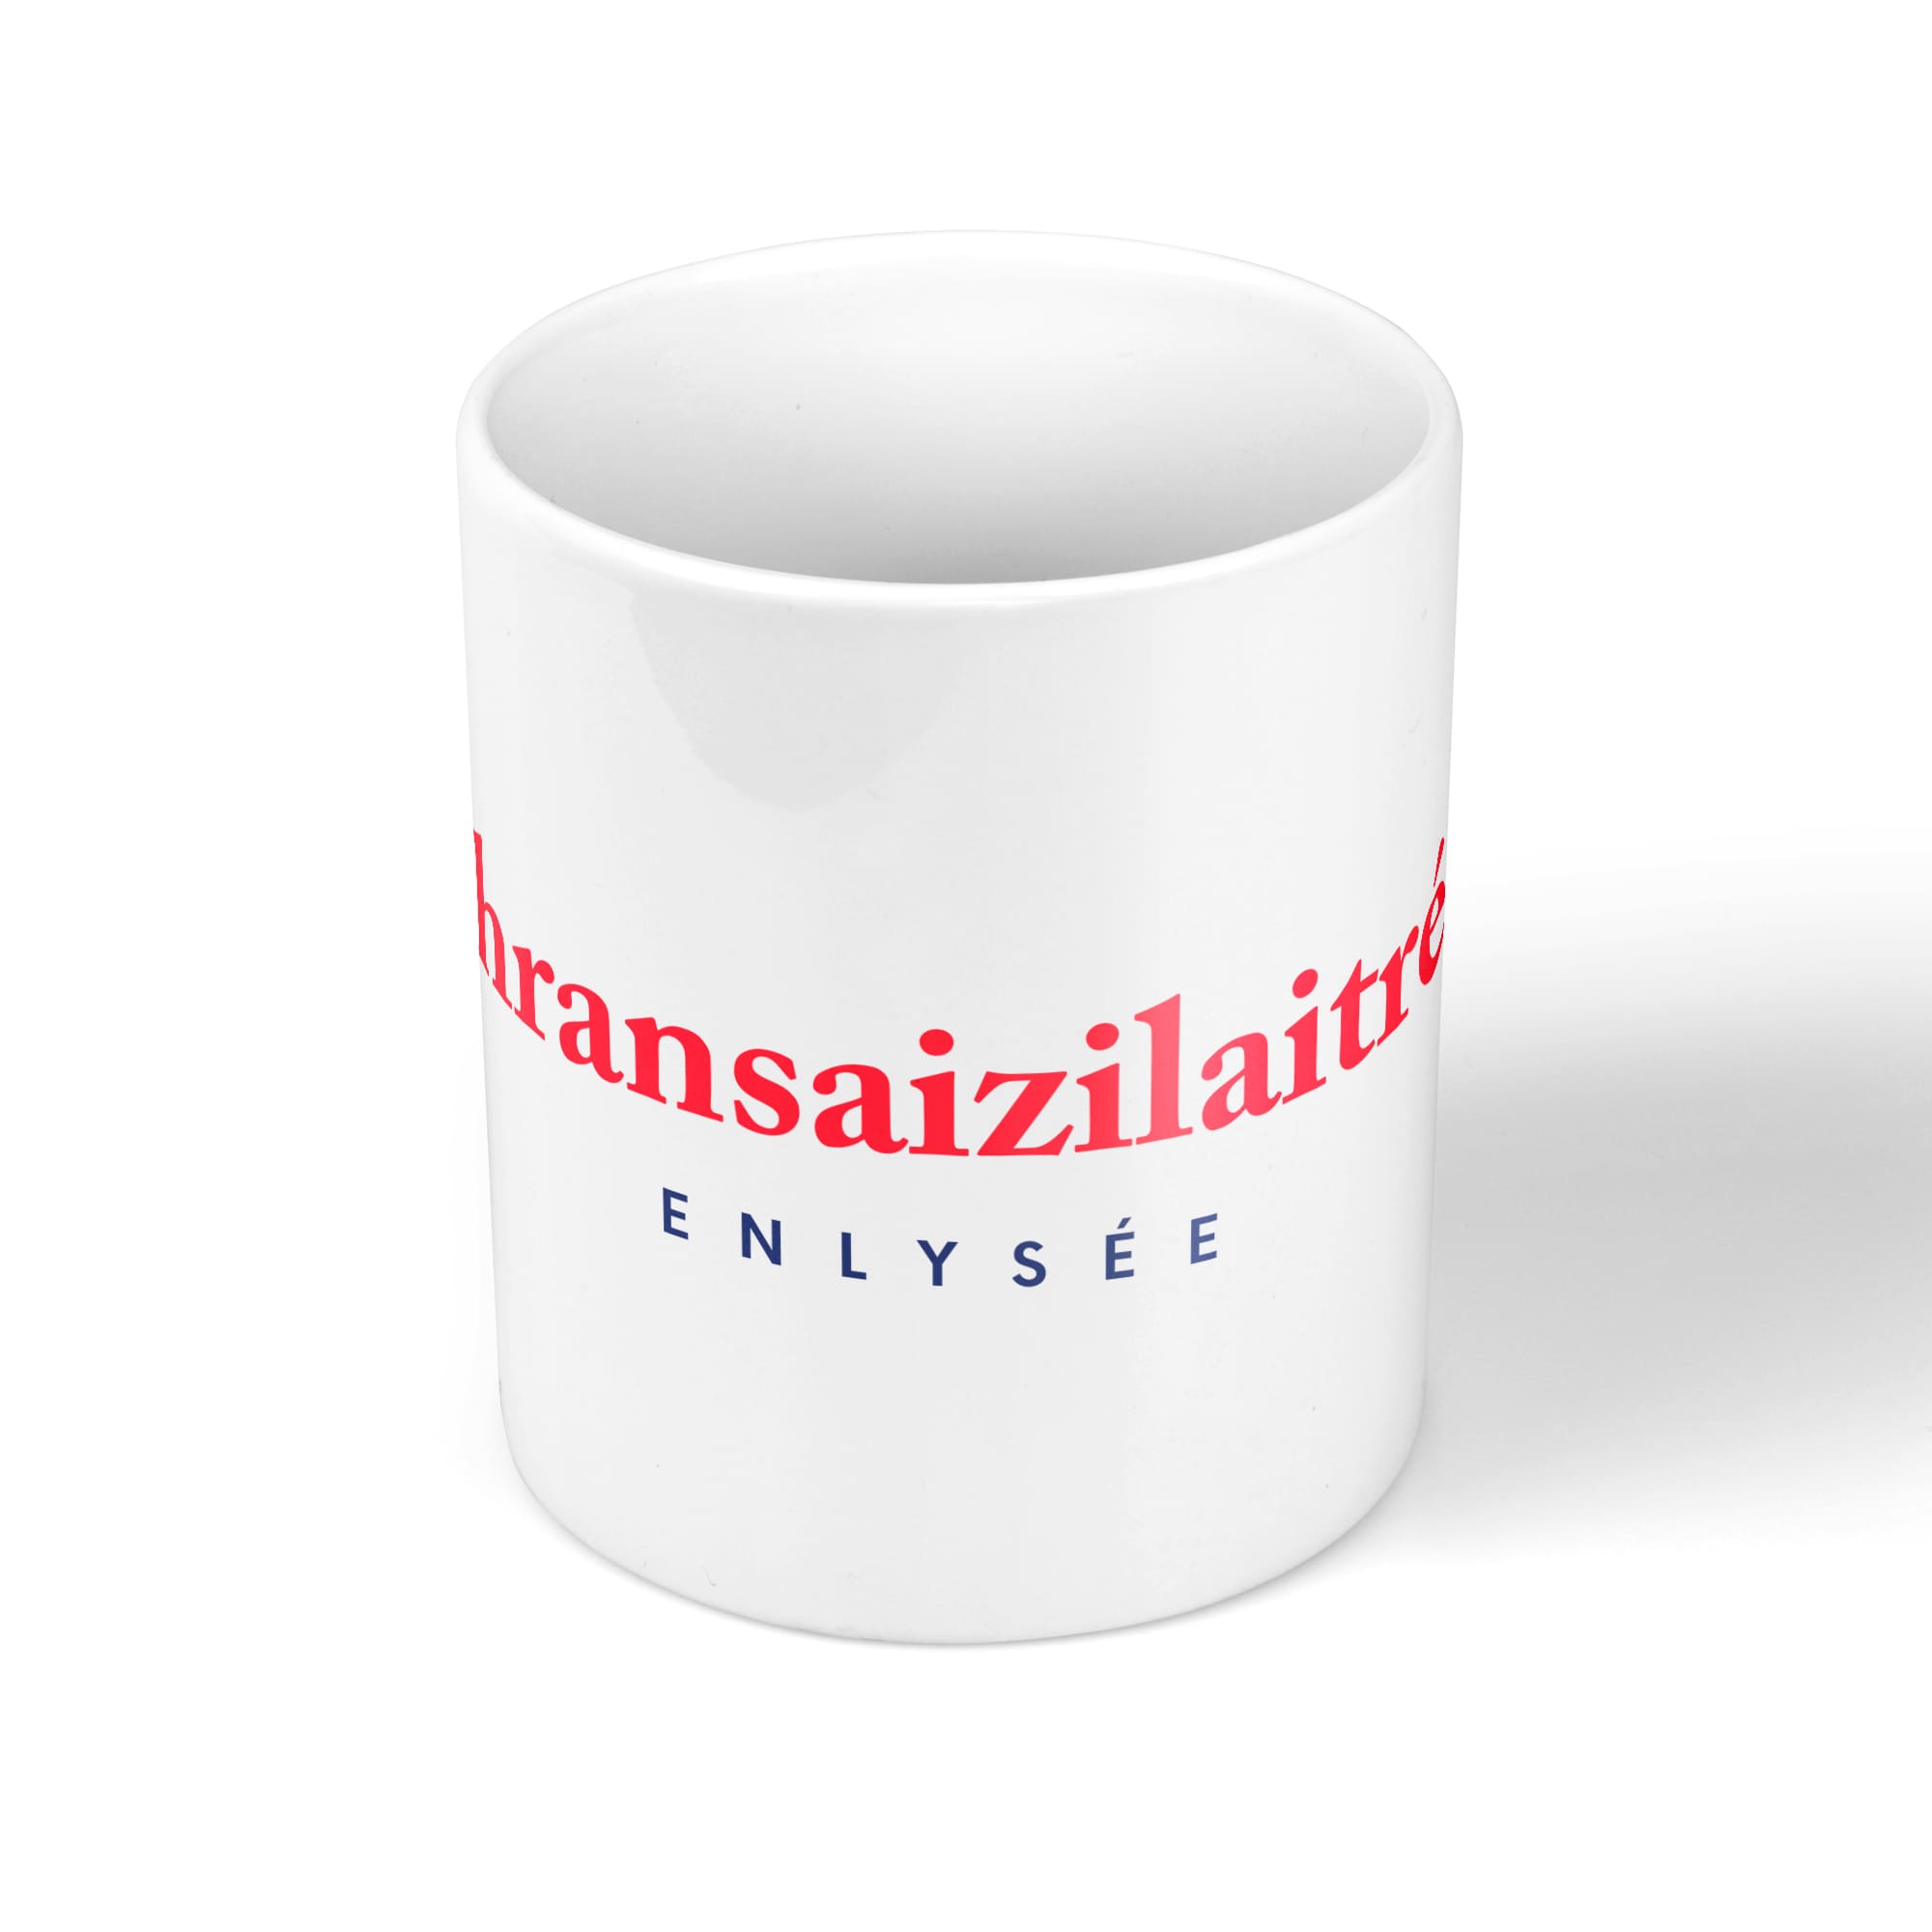 Le mug Phransaizilaitrée